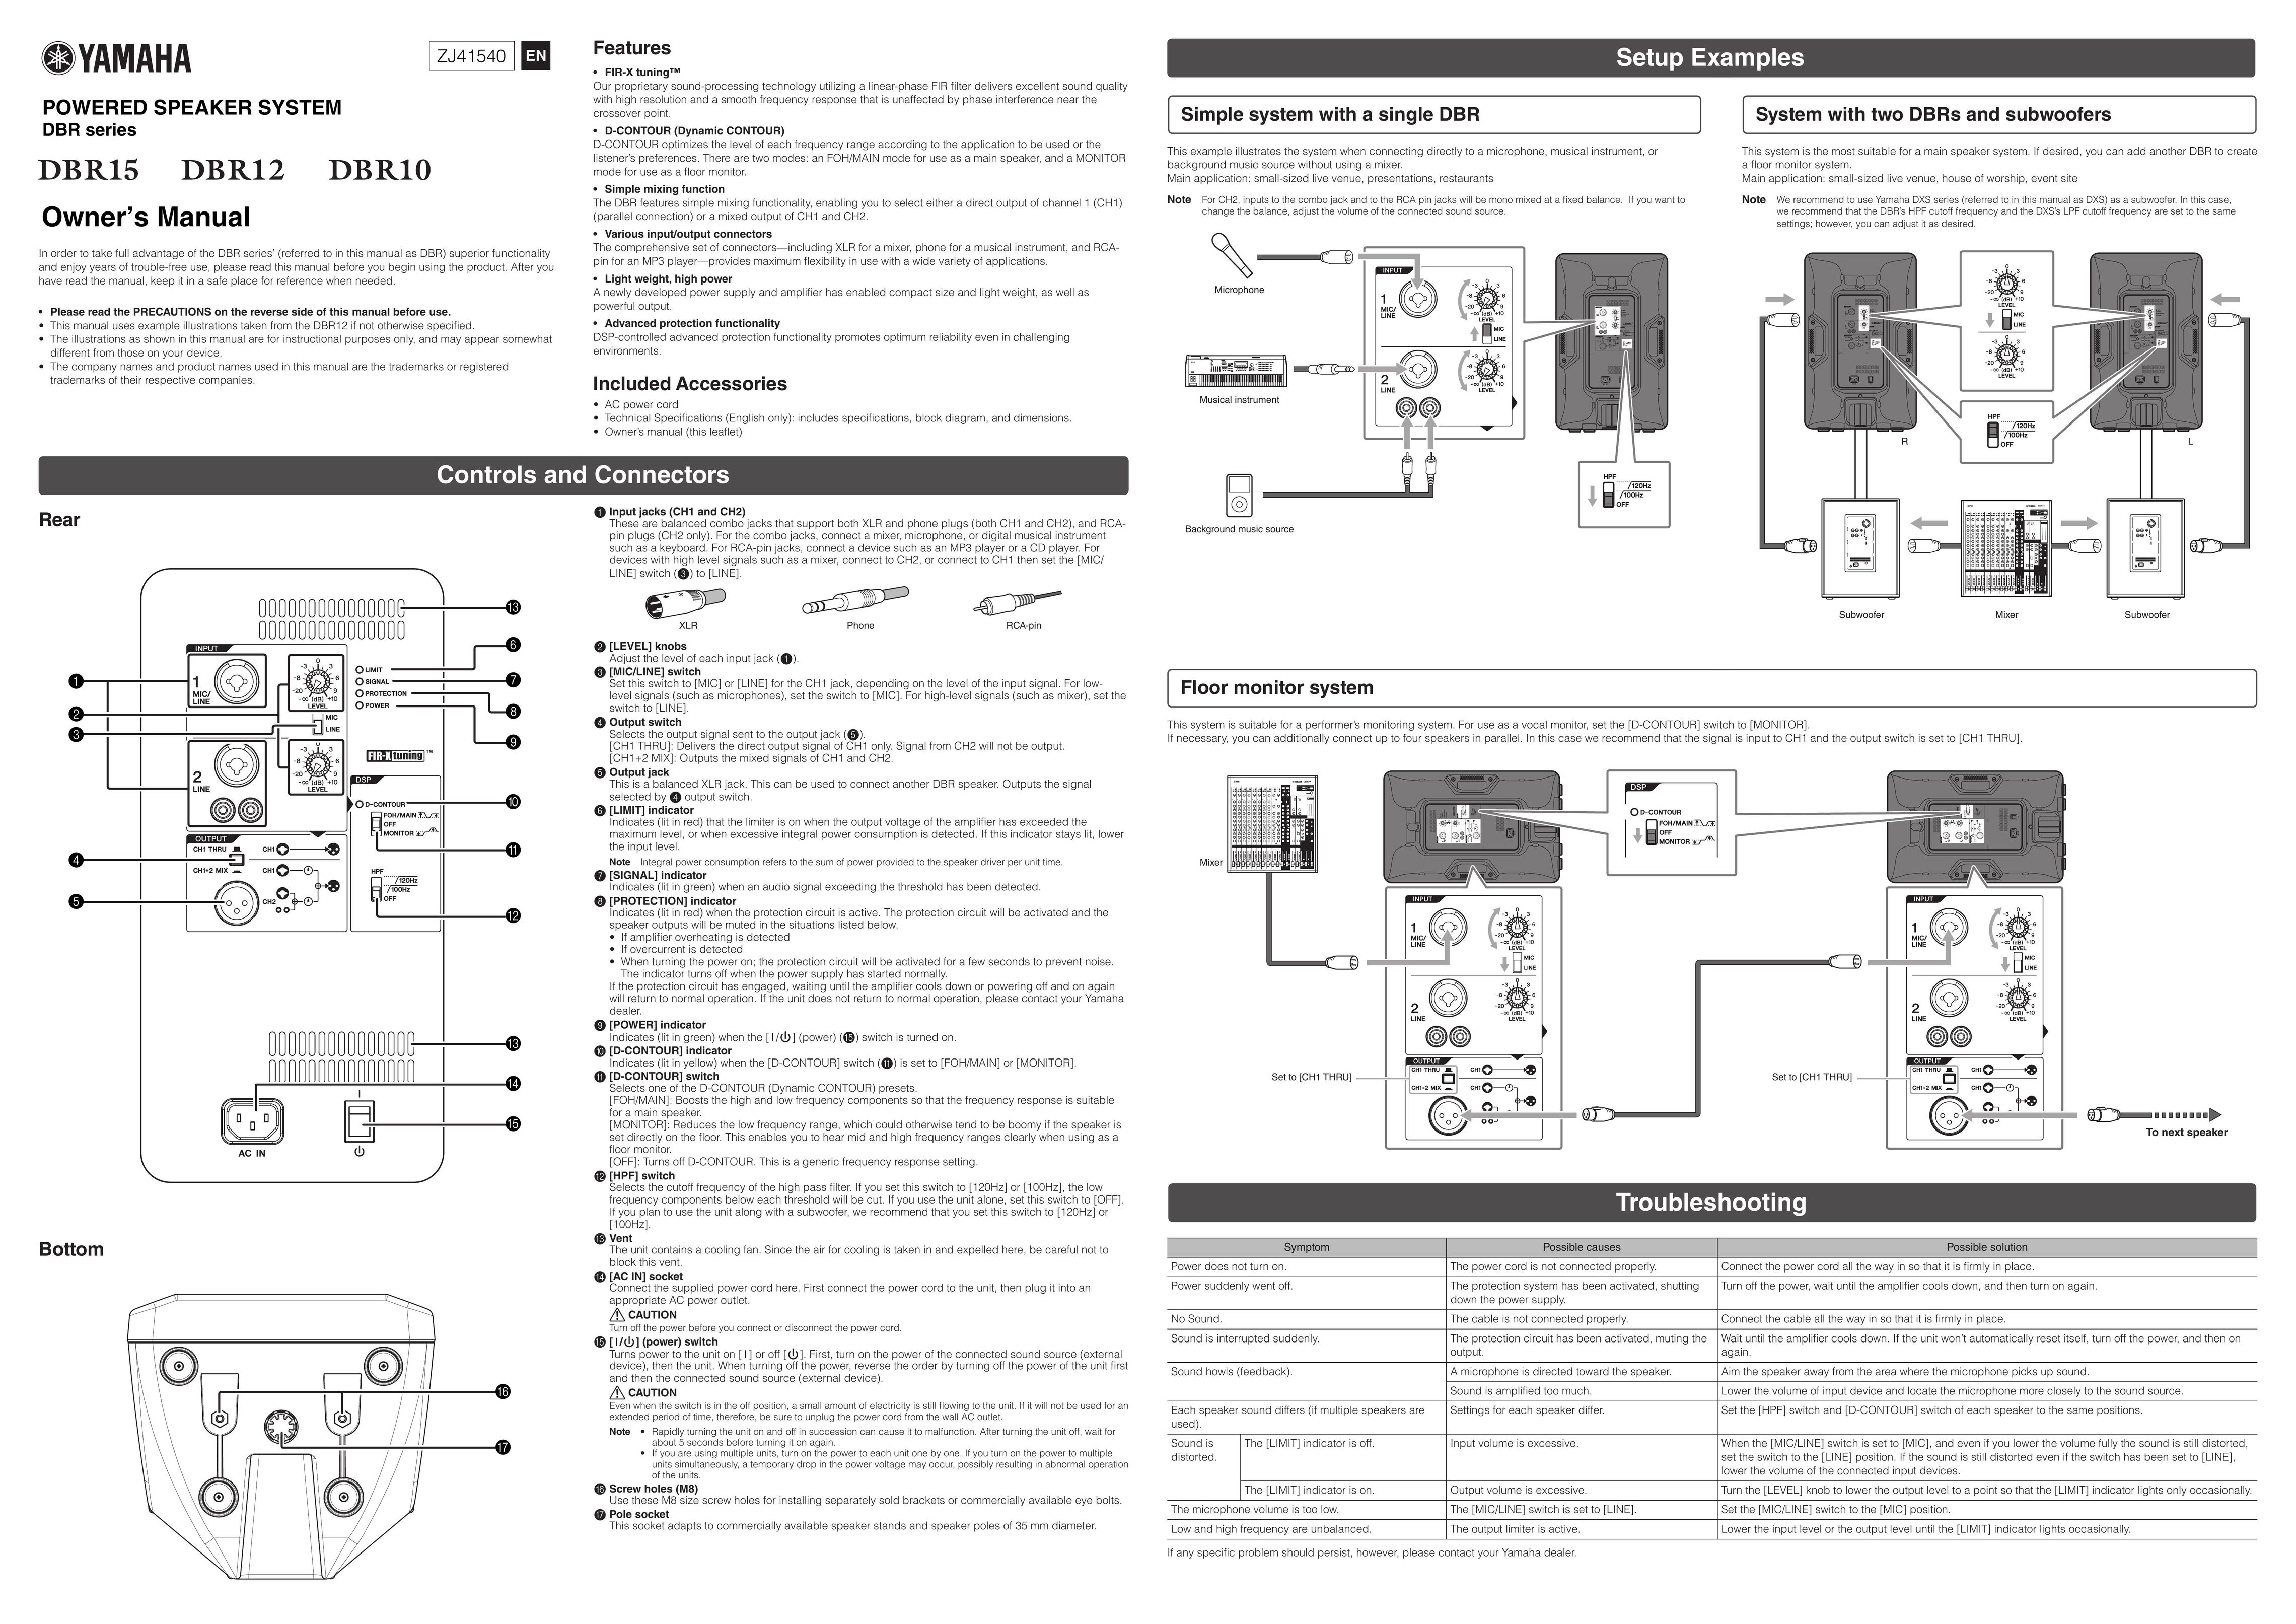 Yamaha DBR10 Speaker System User Manual